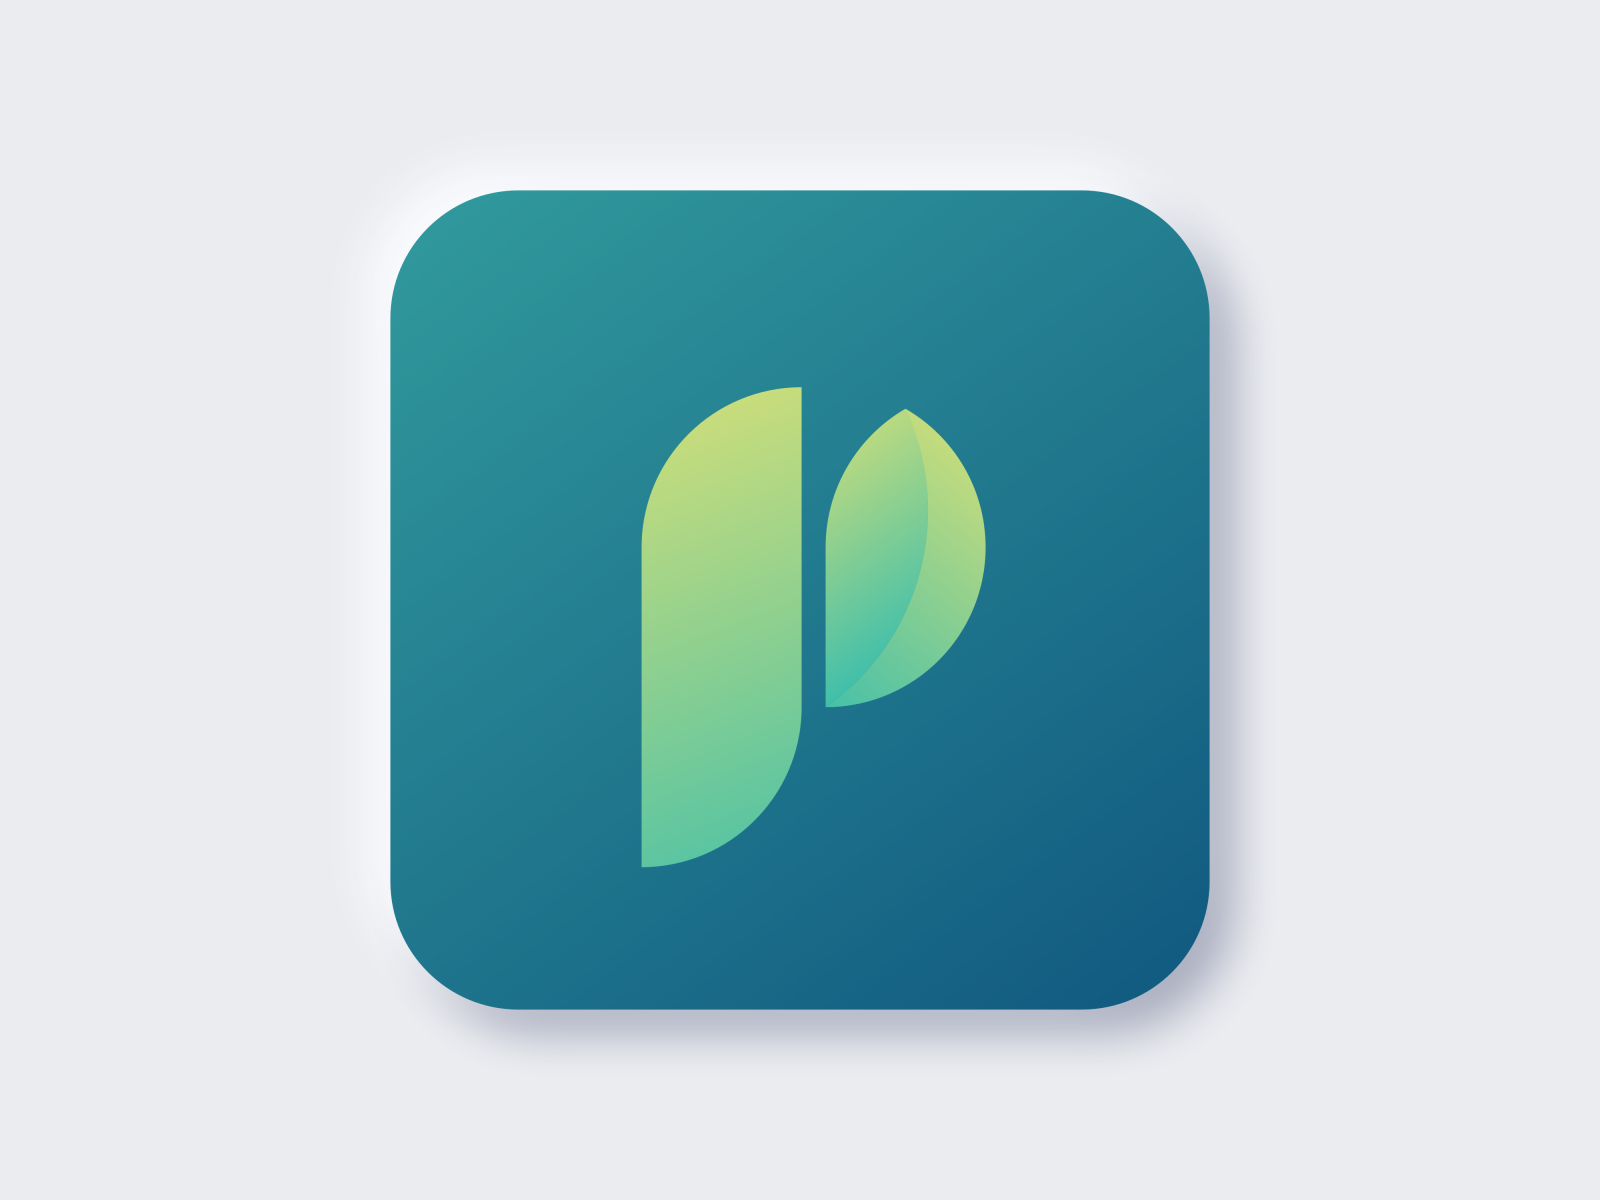 Planty app icon - Daily UI 005